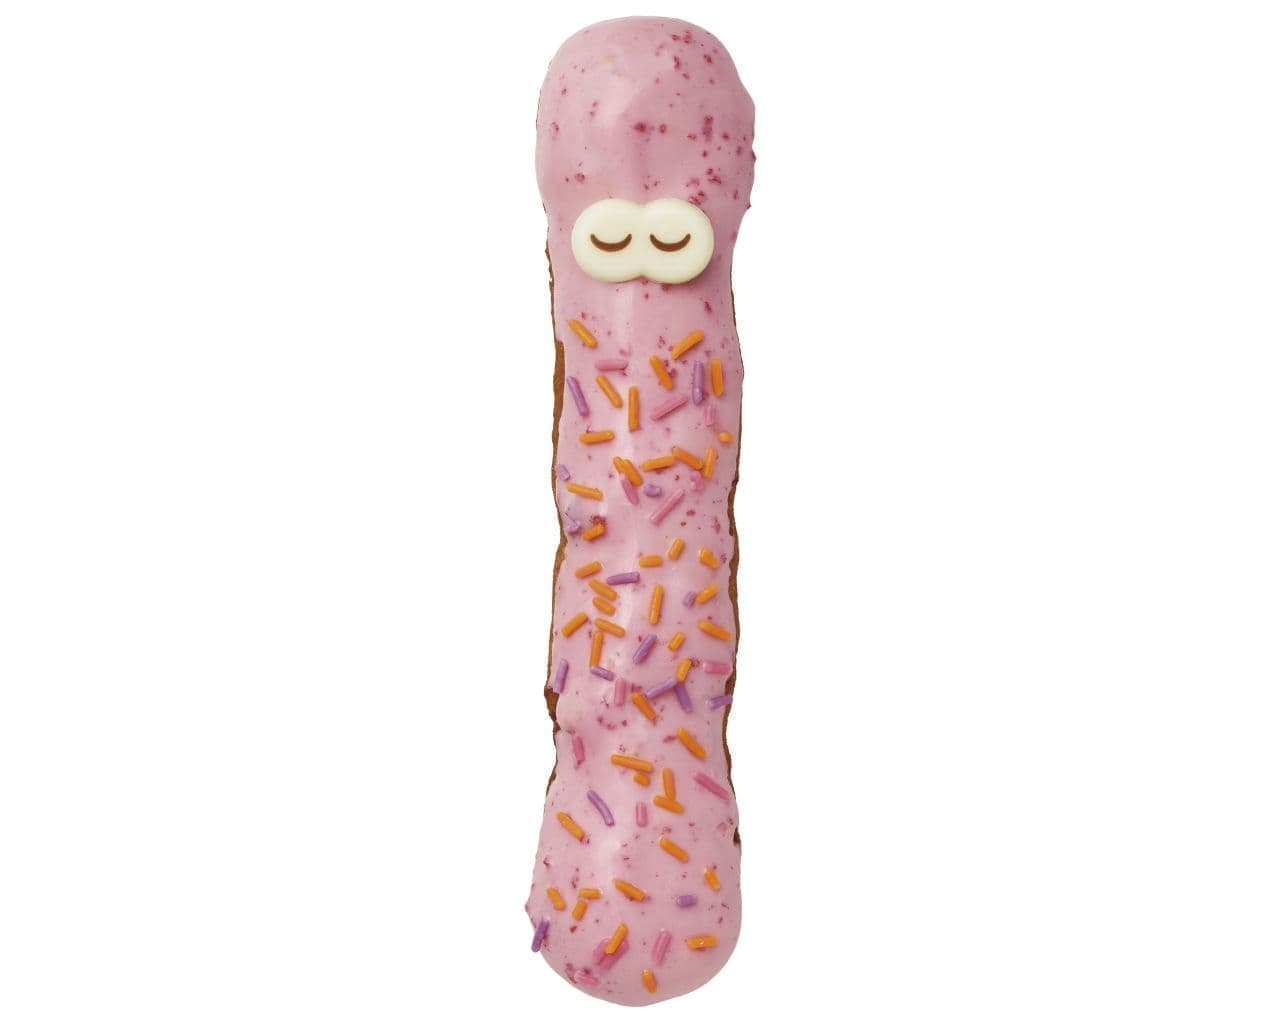 Mr. Donut "Pink Mummy